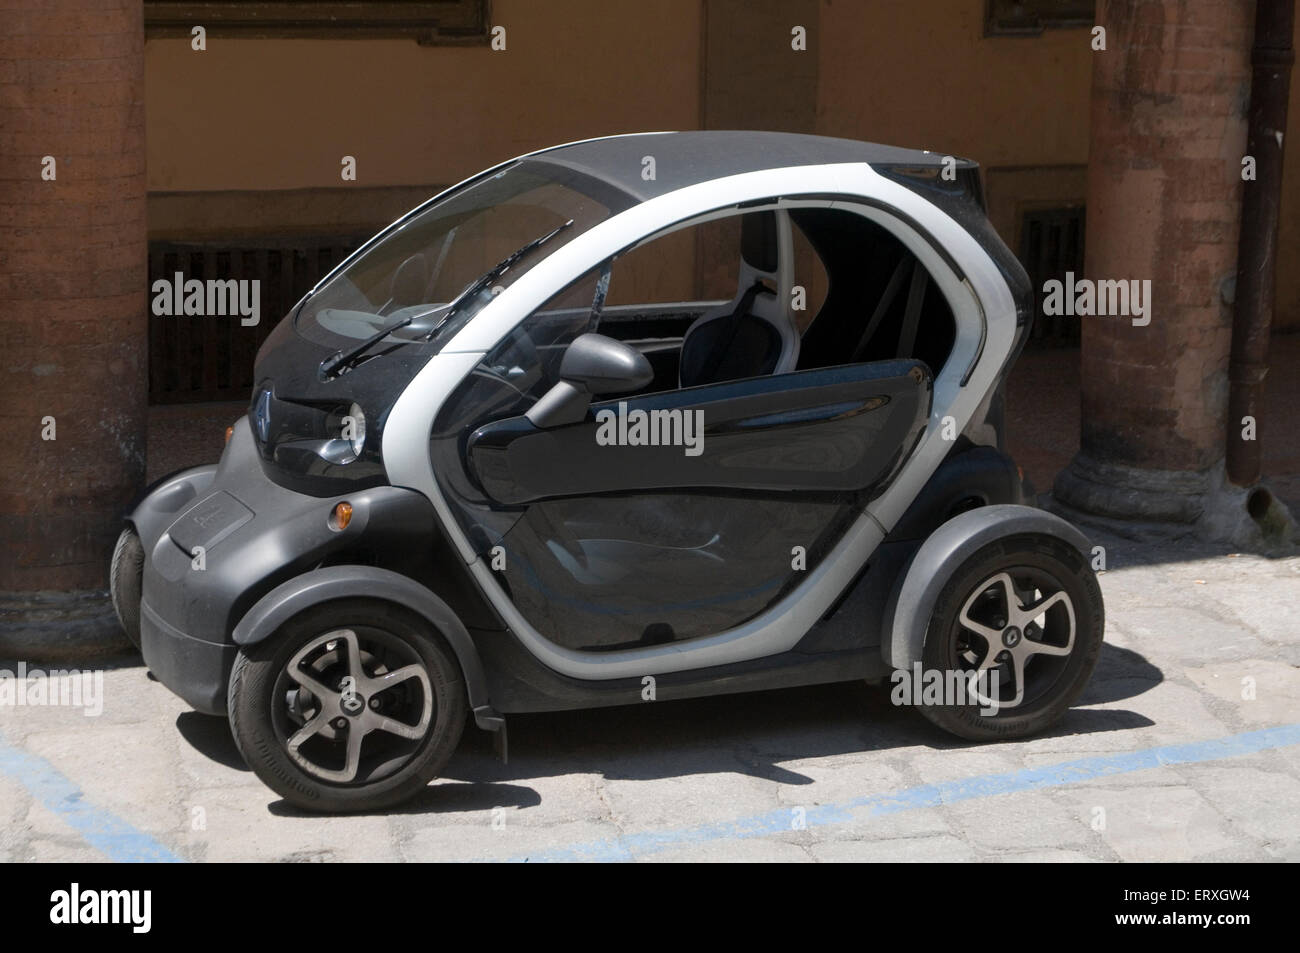 https://c8.alamy.com/comp/ERXGW4/renault-twizy-is-a-100-electric-vehicle-car-cars-zero-emissions-city-ERXGW4.jpg